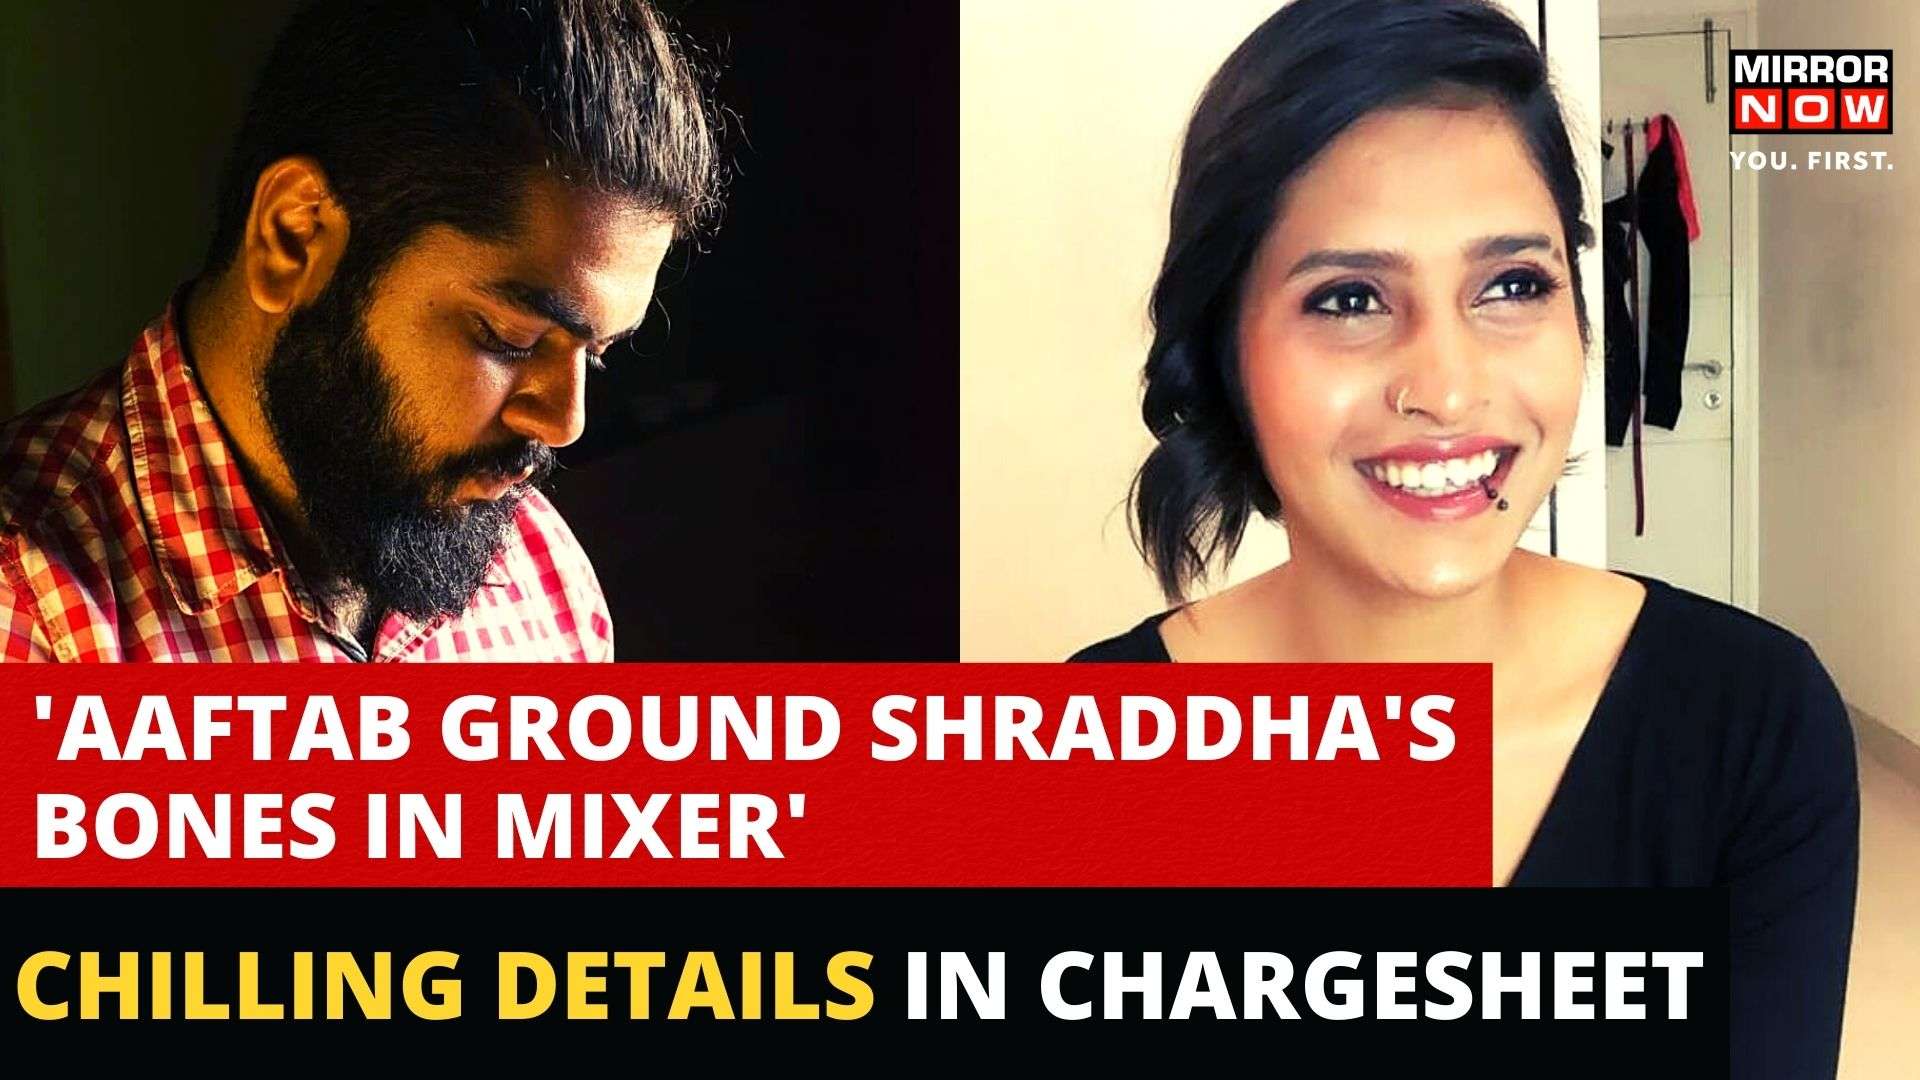 Ground Bones In Mixer Chargesheet Reveals Chilling Details Of Shraddha Walkars Murder By Aaftab Poonawala